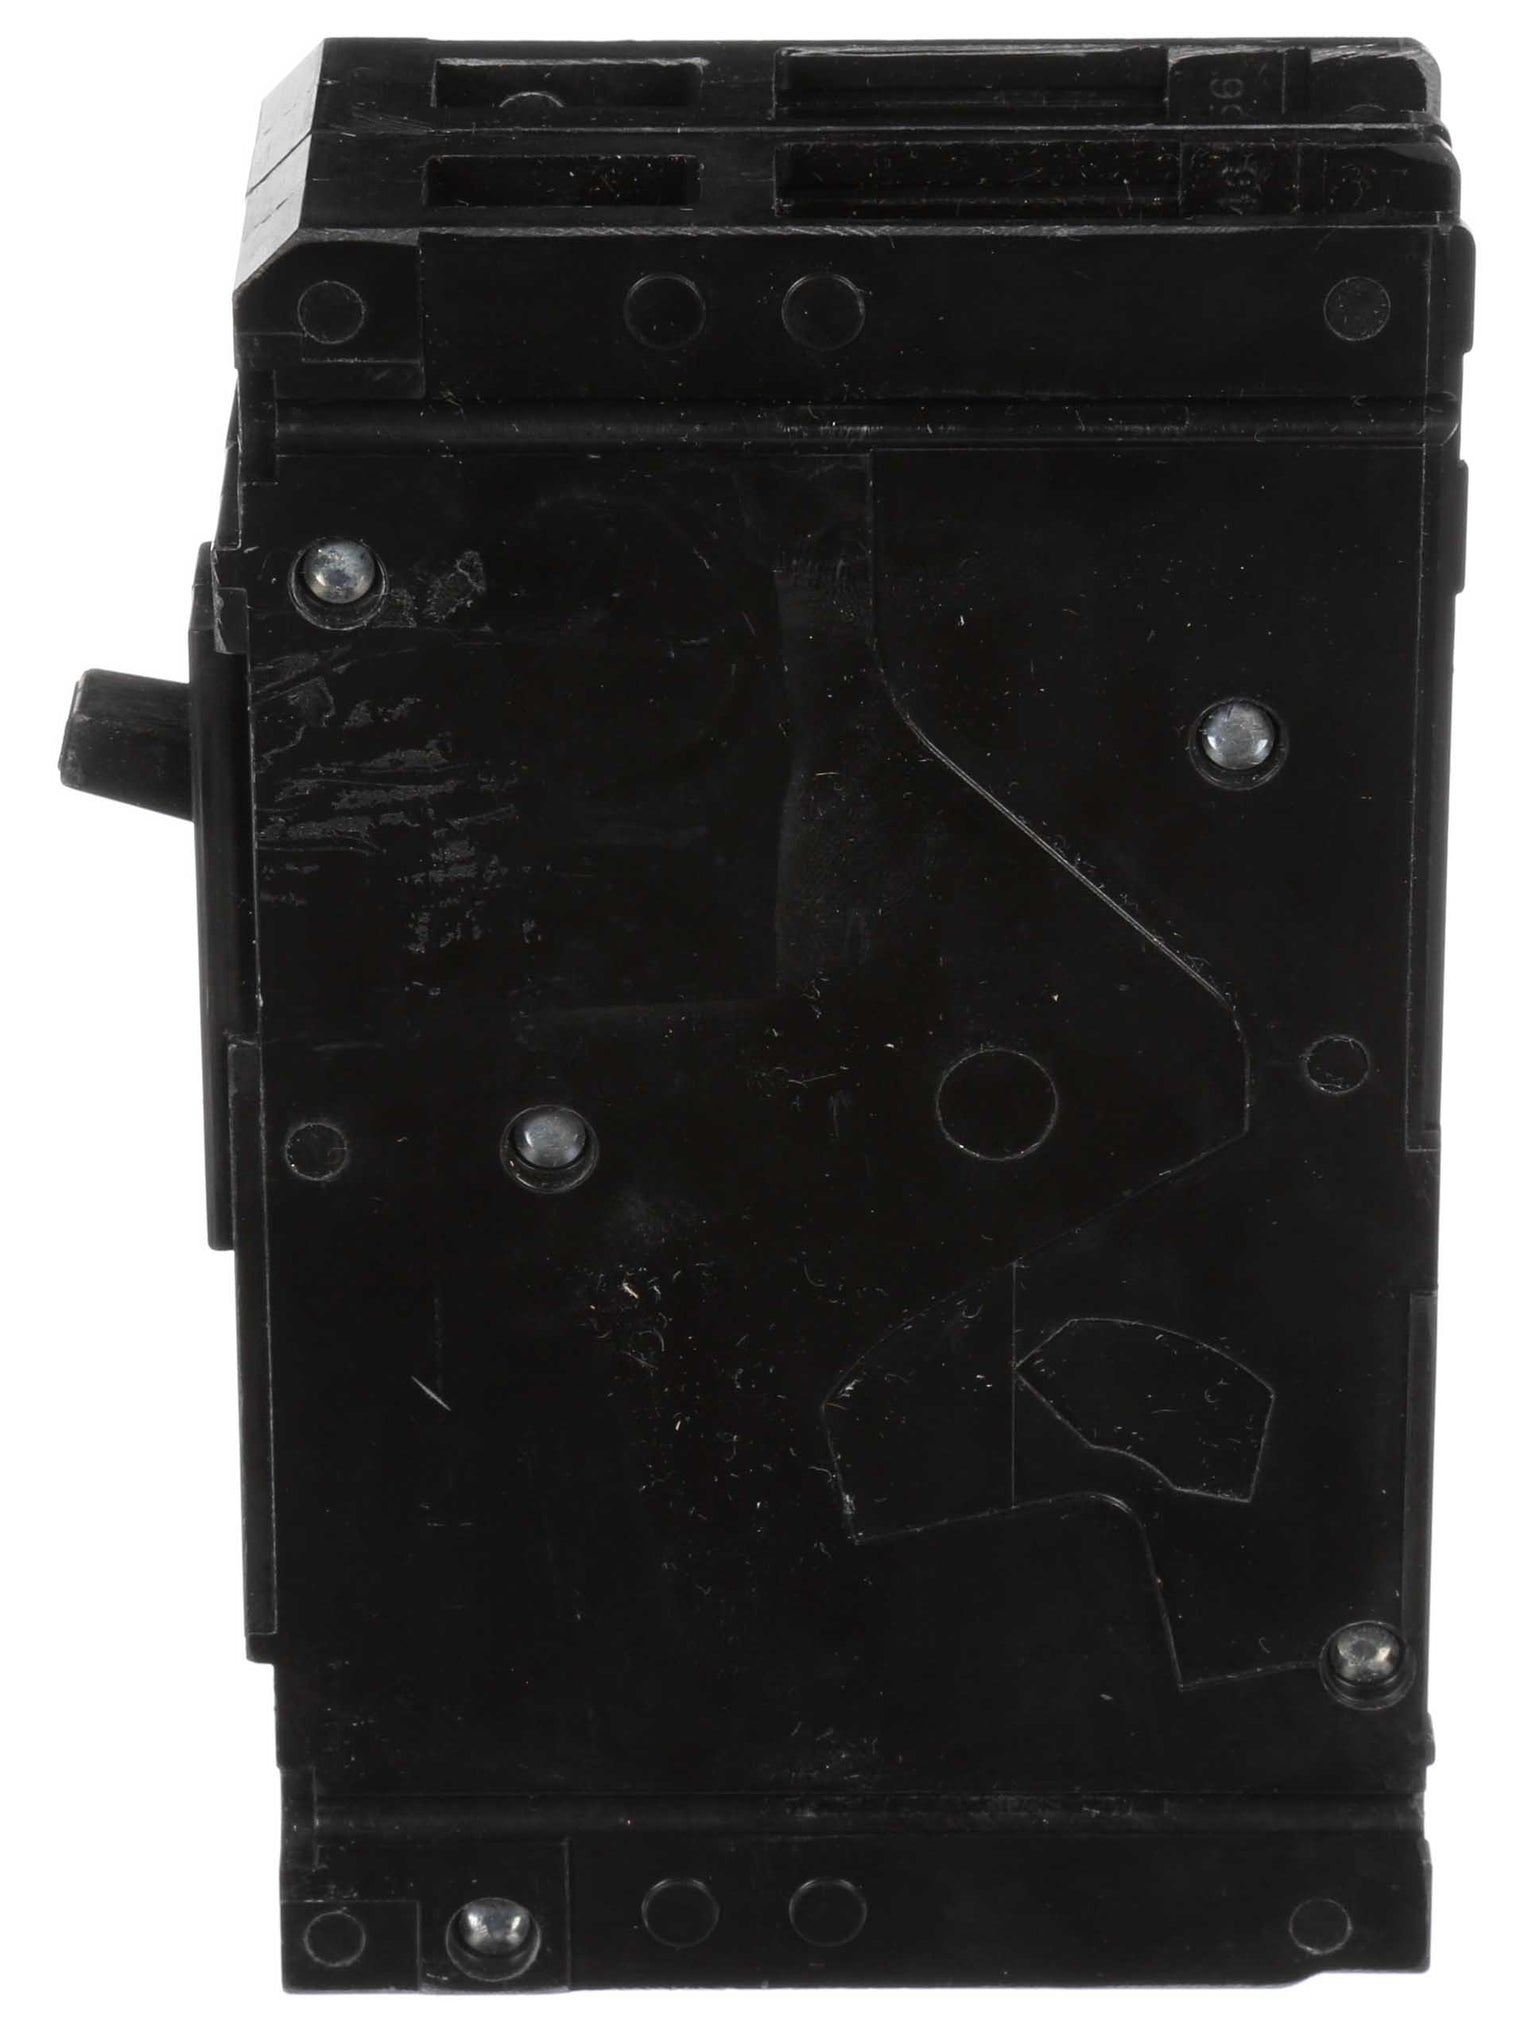 ED22B045 - Siemens - Molded Case Circuit Breaker